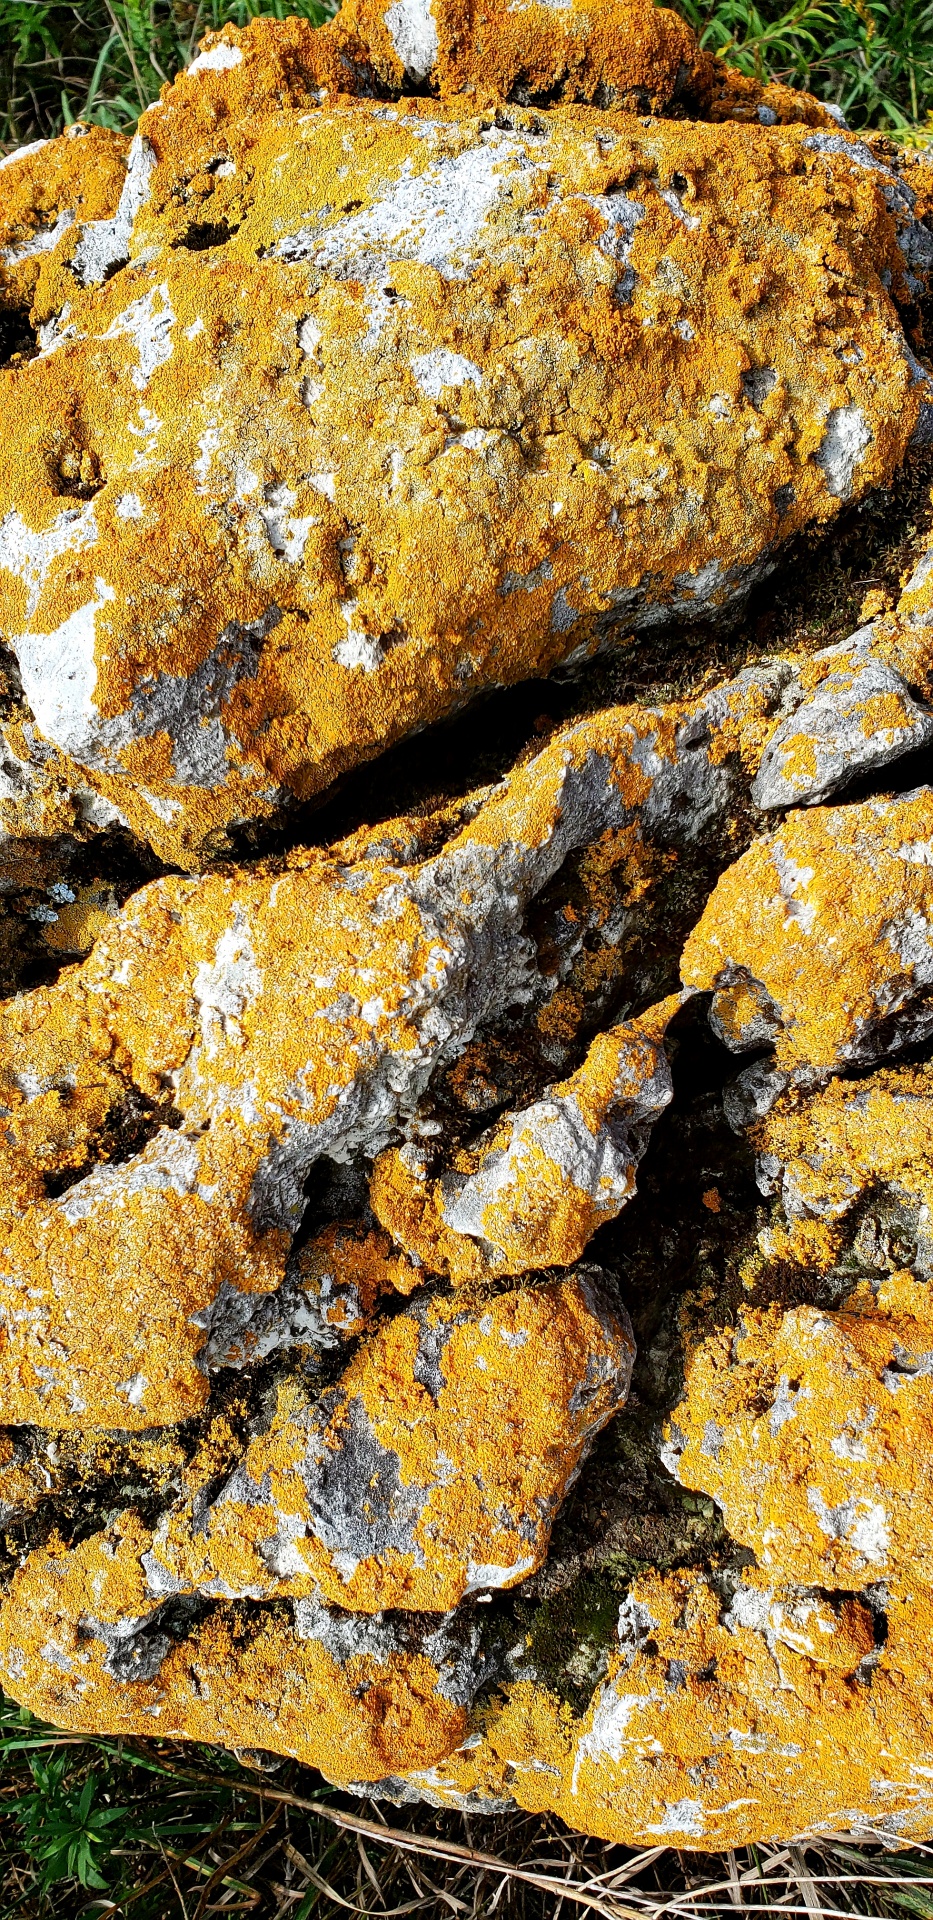 A Lichen Covered Rock